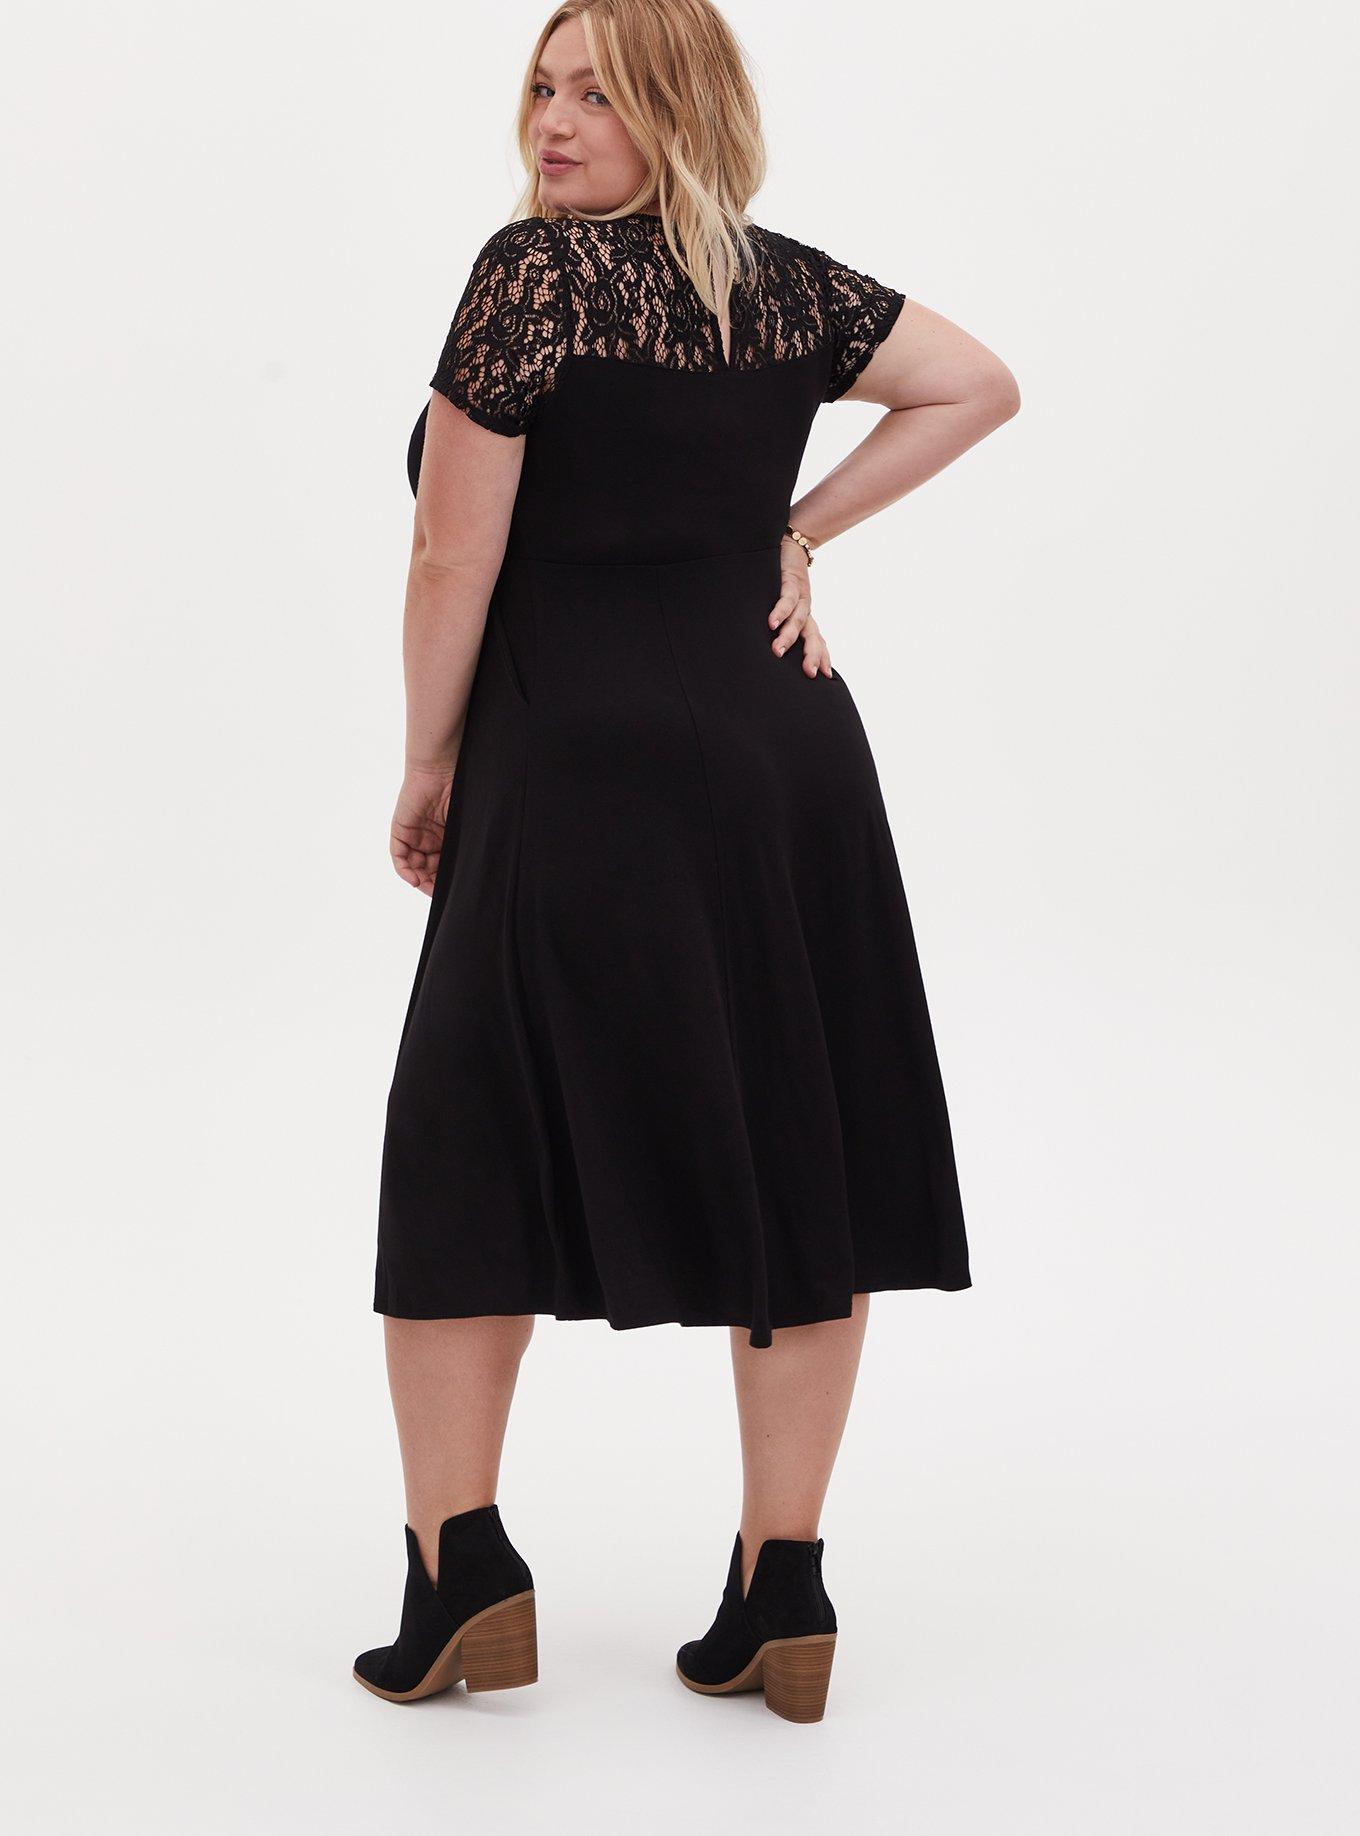 Plus Size - Super Soft Black Lace Inset Midi Dress - Torrid